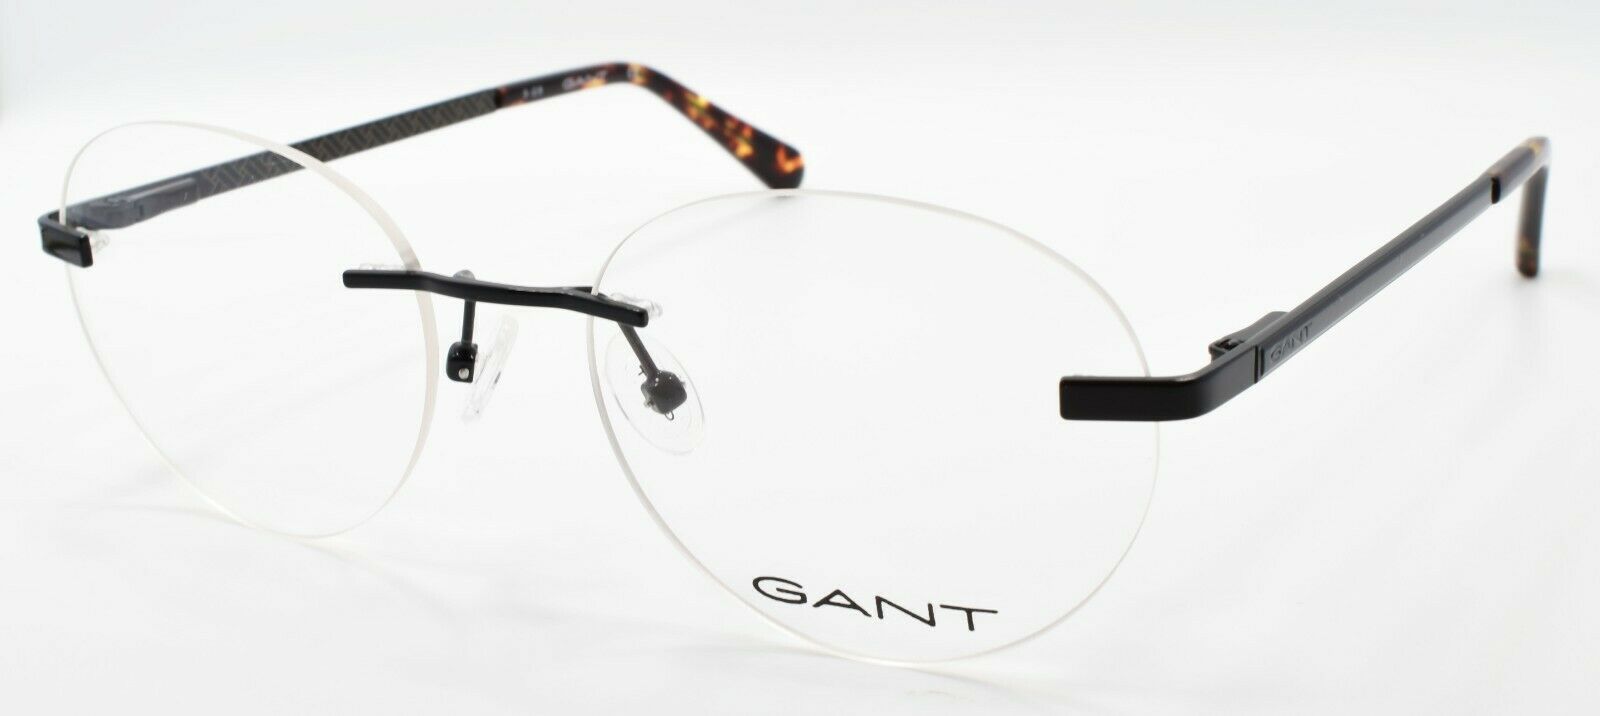 1-GANT GA3214 001 Men's Glasses Frames Rimless 52-18-145 Shiny Black-889214147677-IKSpecs